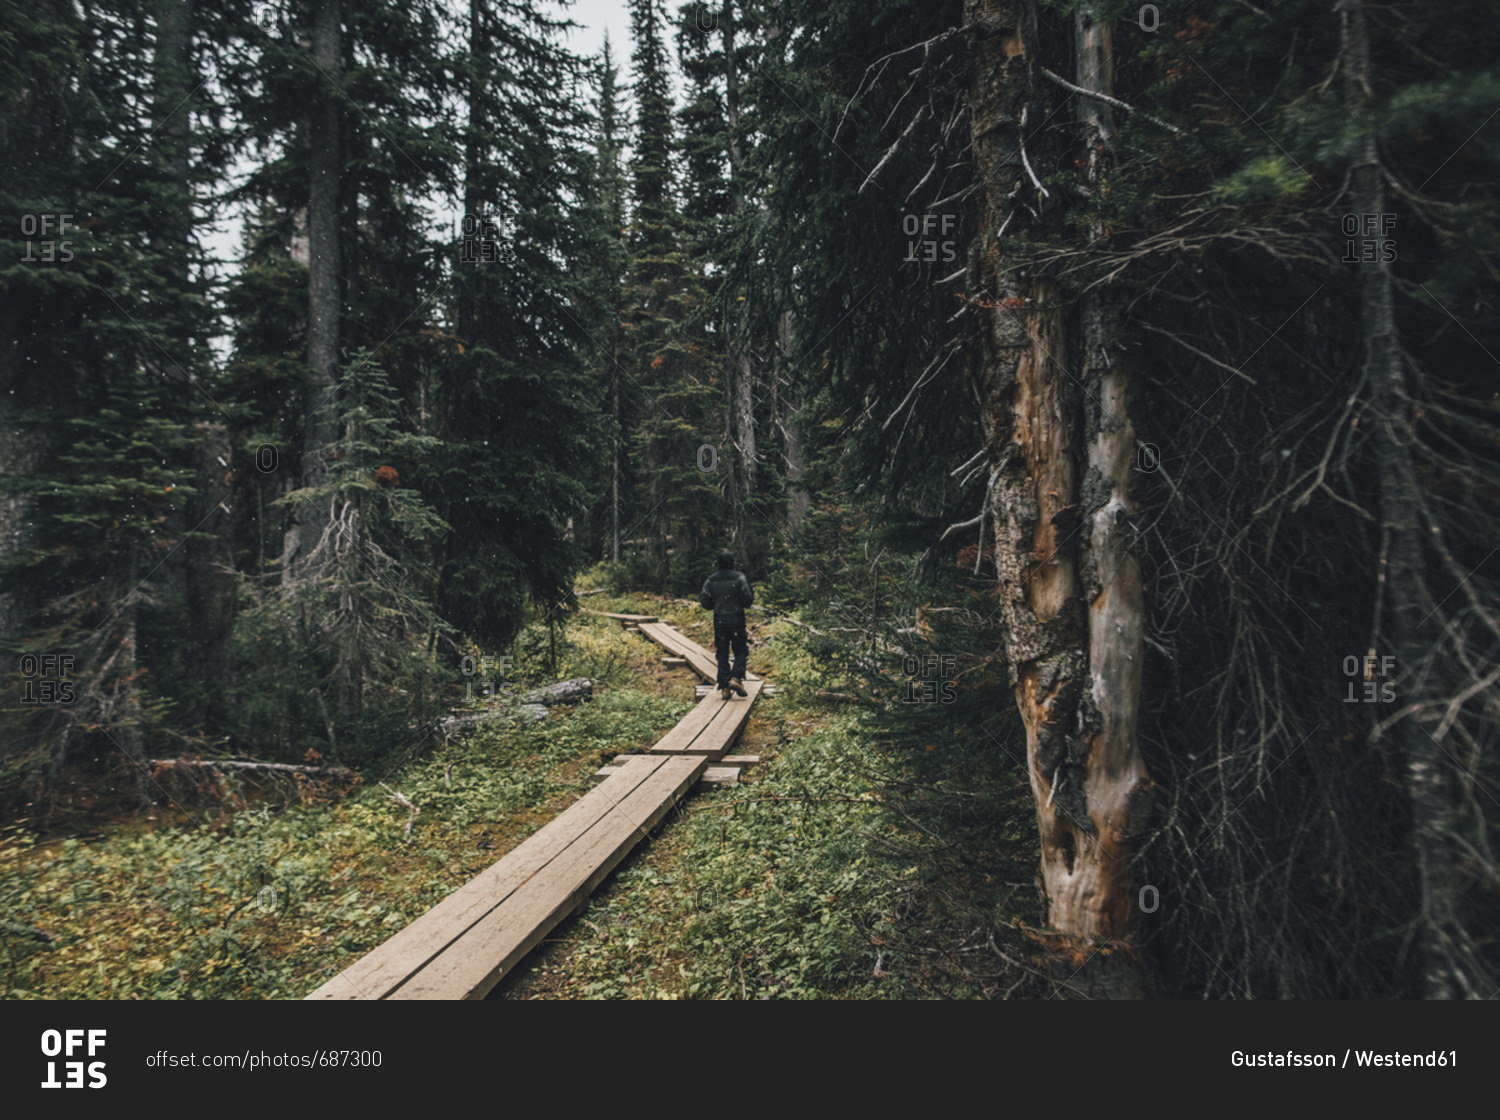 Canada- British Columbia- Yoho National Park- man hiking on boardwalk through forest